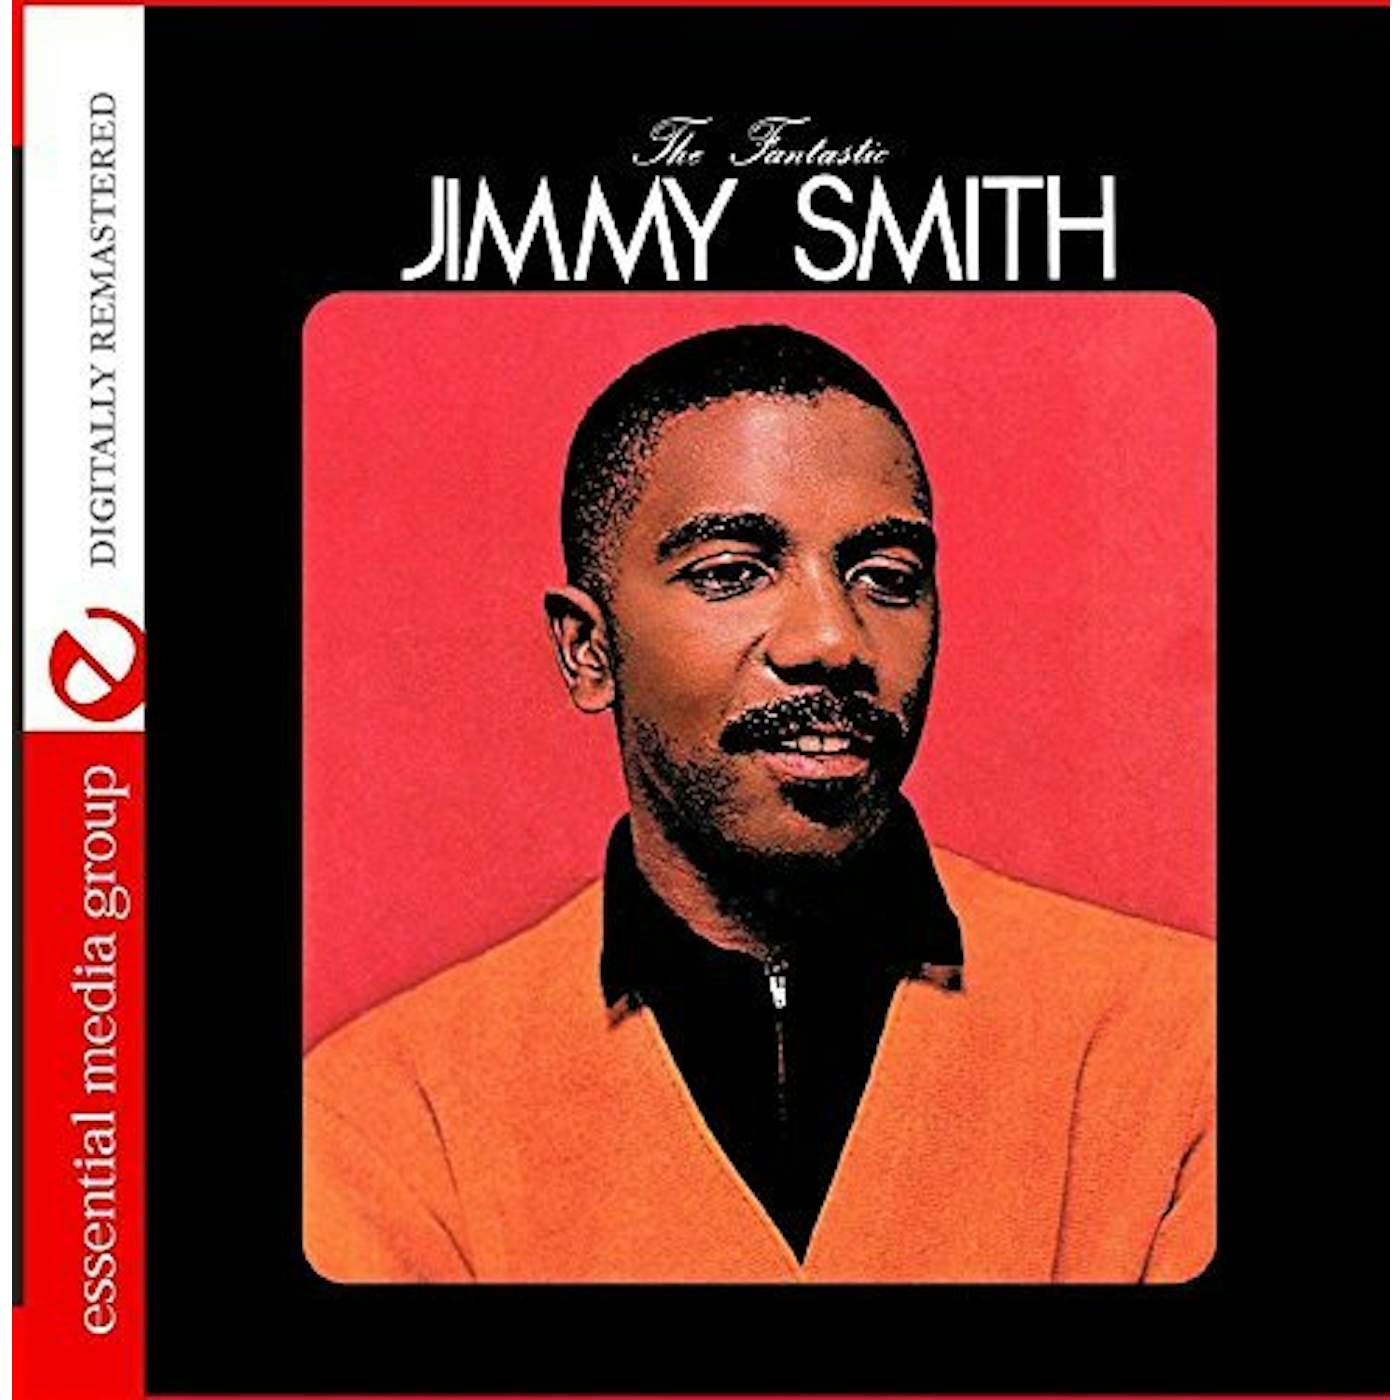 FANTASTIC JIMMY SMITH CD